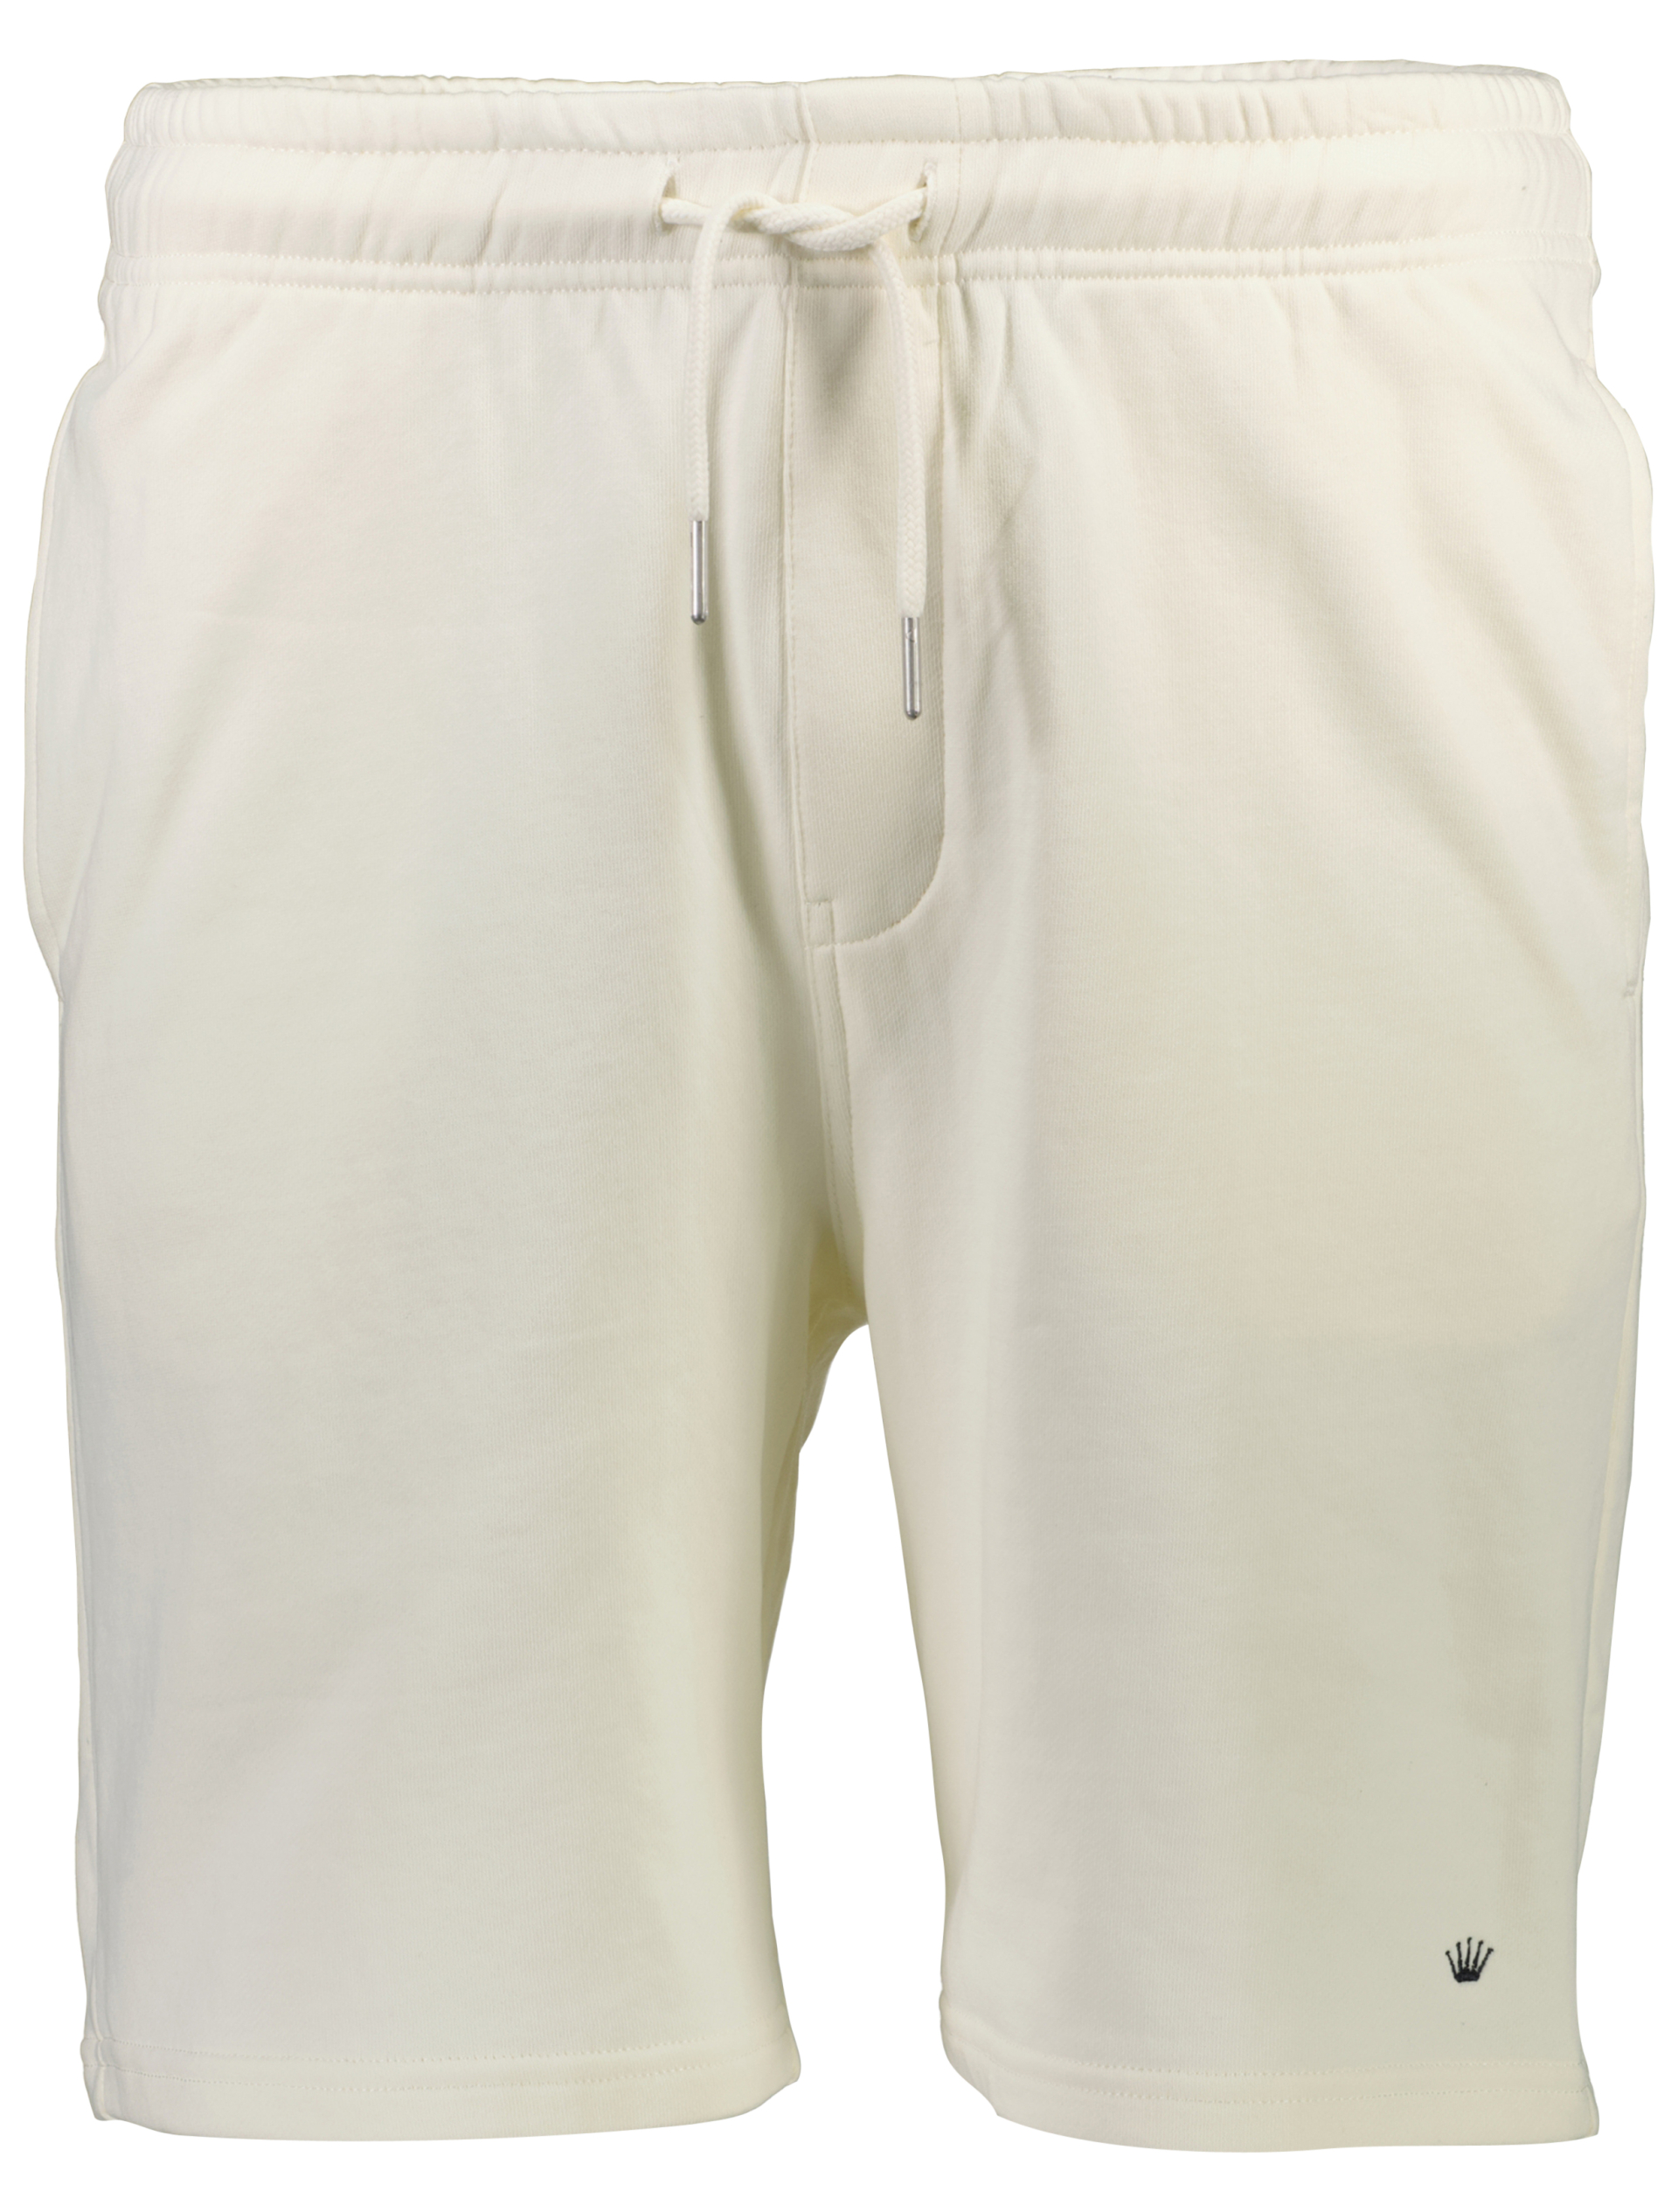 Junk de Luxe Casual shorts white / off white